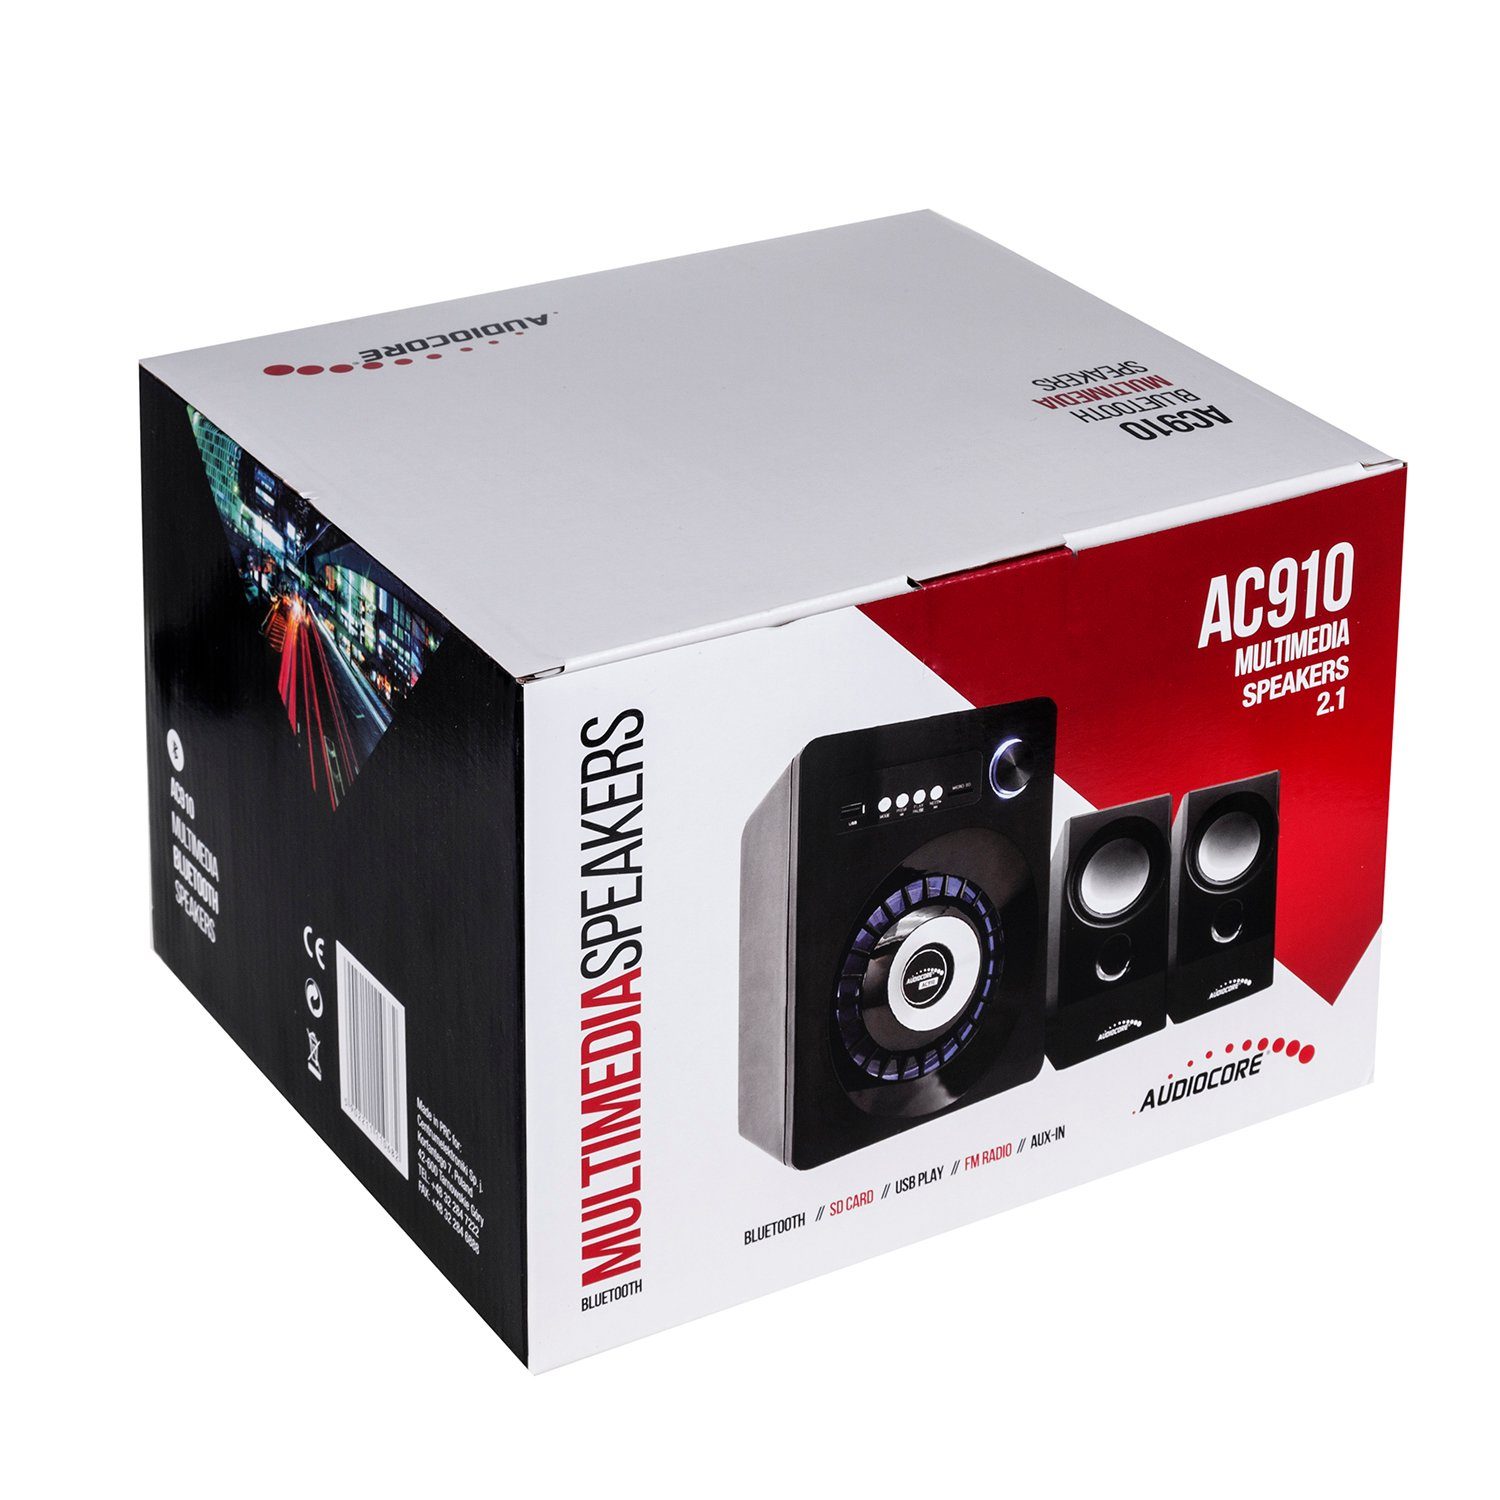 55 SD, inkl. Fernbedienung) Audiocore 2.1 USB, Lautsprechersystem AUX, W, (Bluetooth, UKW-Radio, AC910